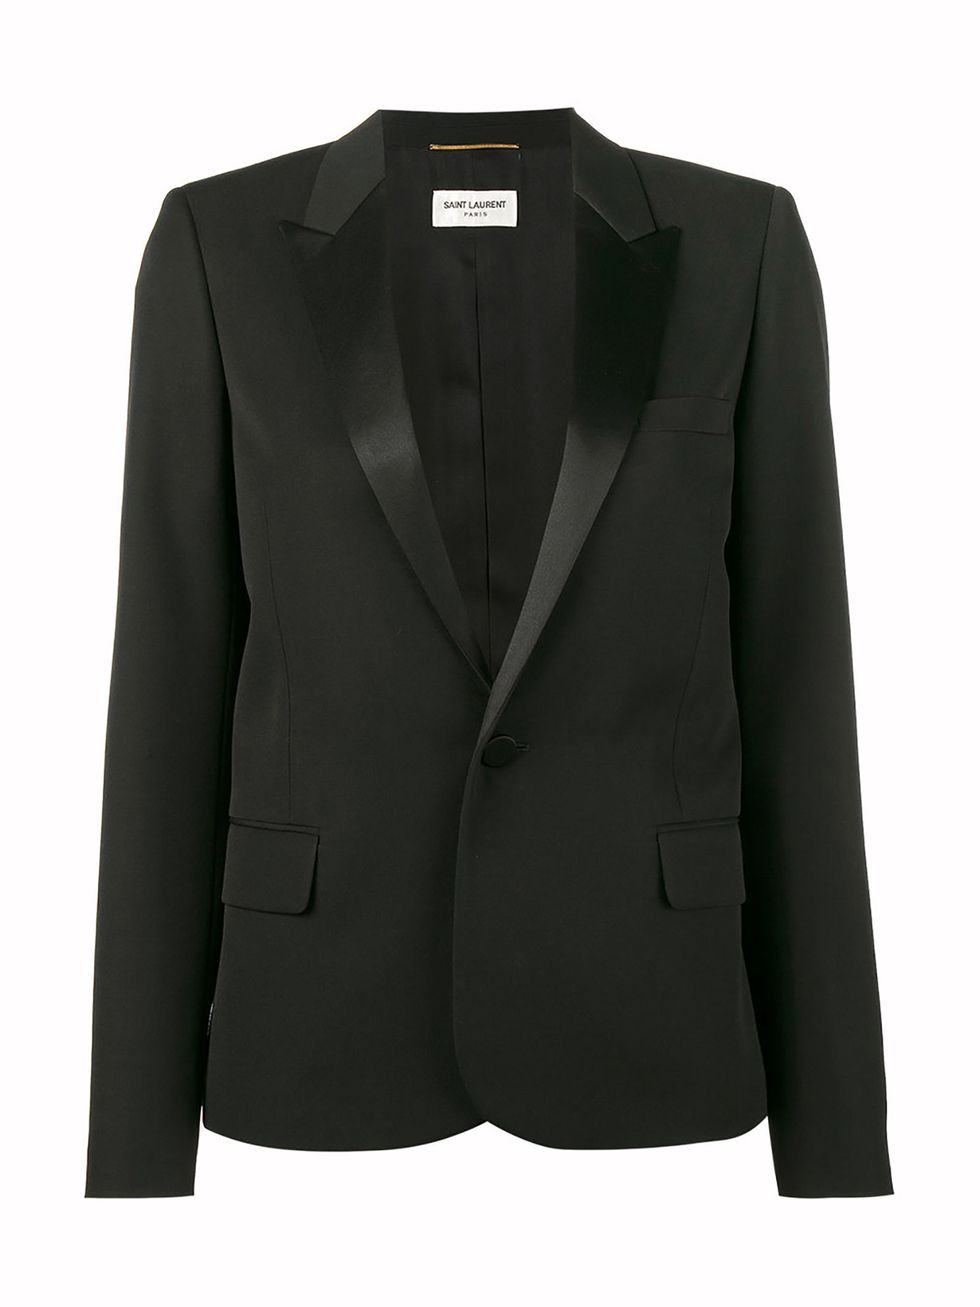 Saint Laurent Tuxedo Jacket £1,965